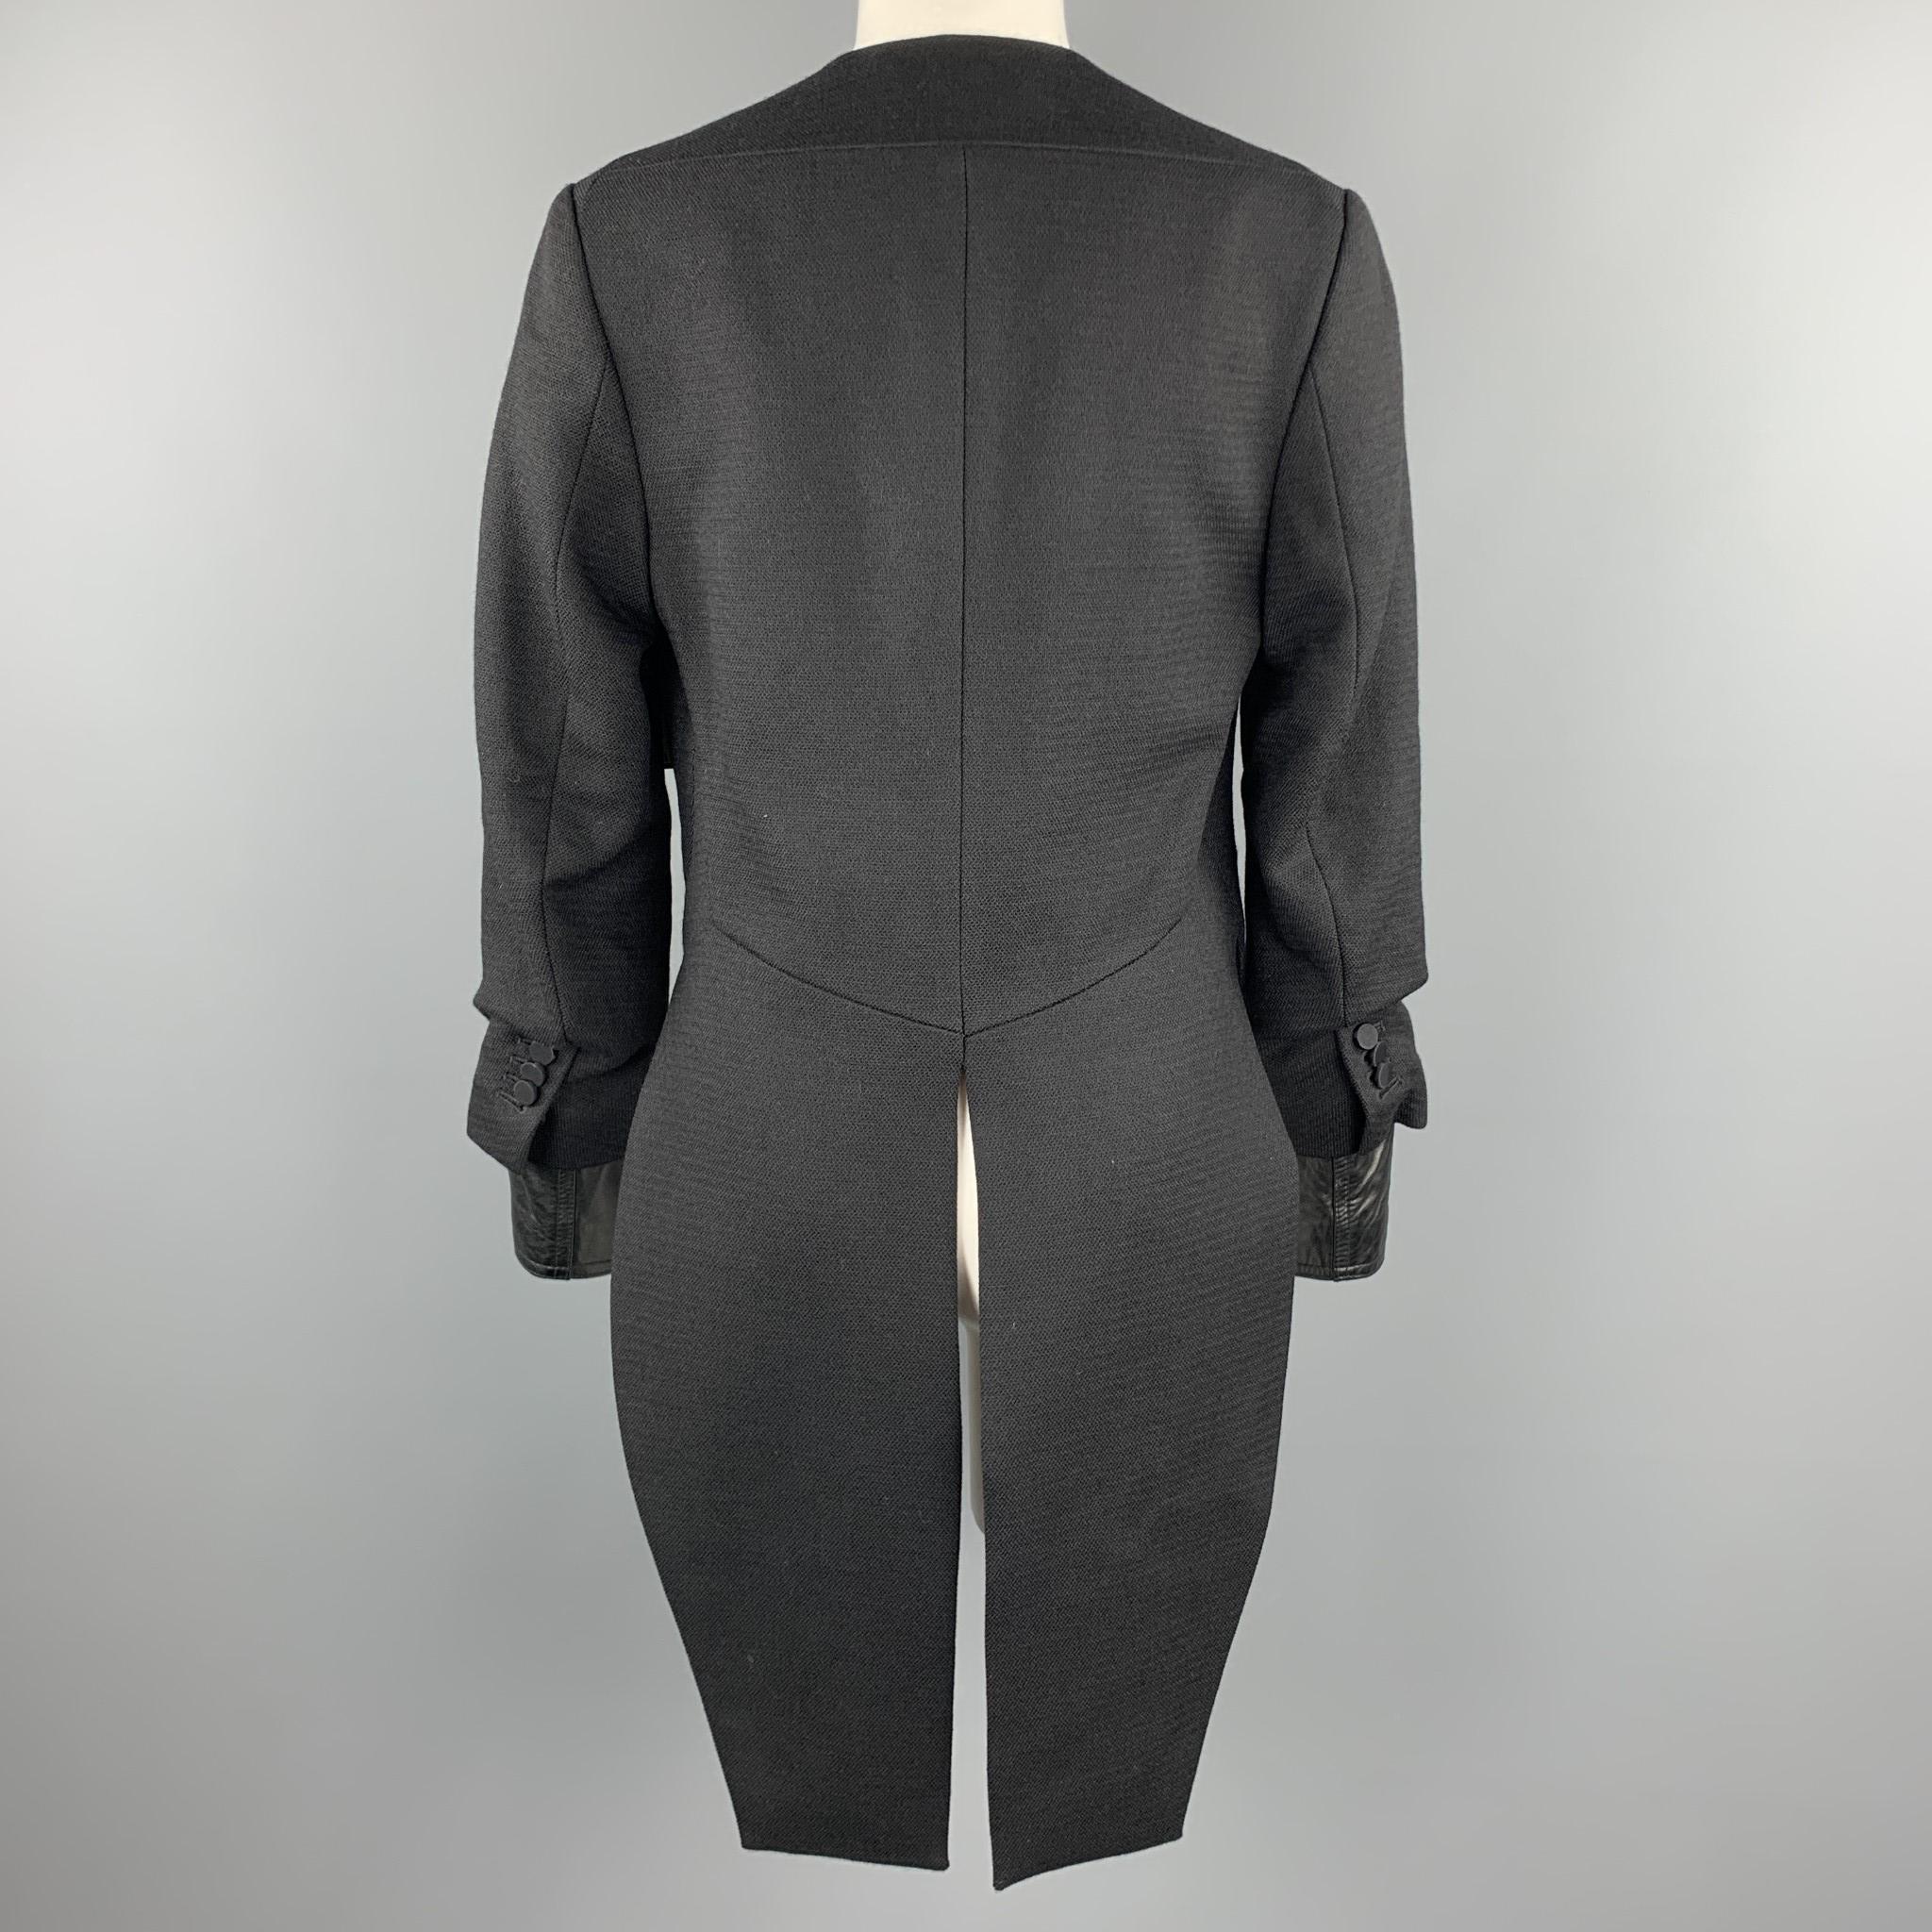 Women's 3.1 PHILLIP LIM Size 6 Black Woven Tuxedo Lapel Leather Cuff Tails Jacket